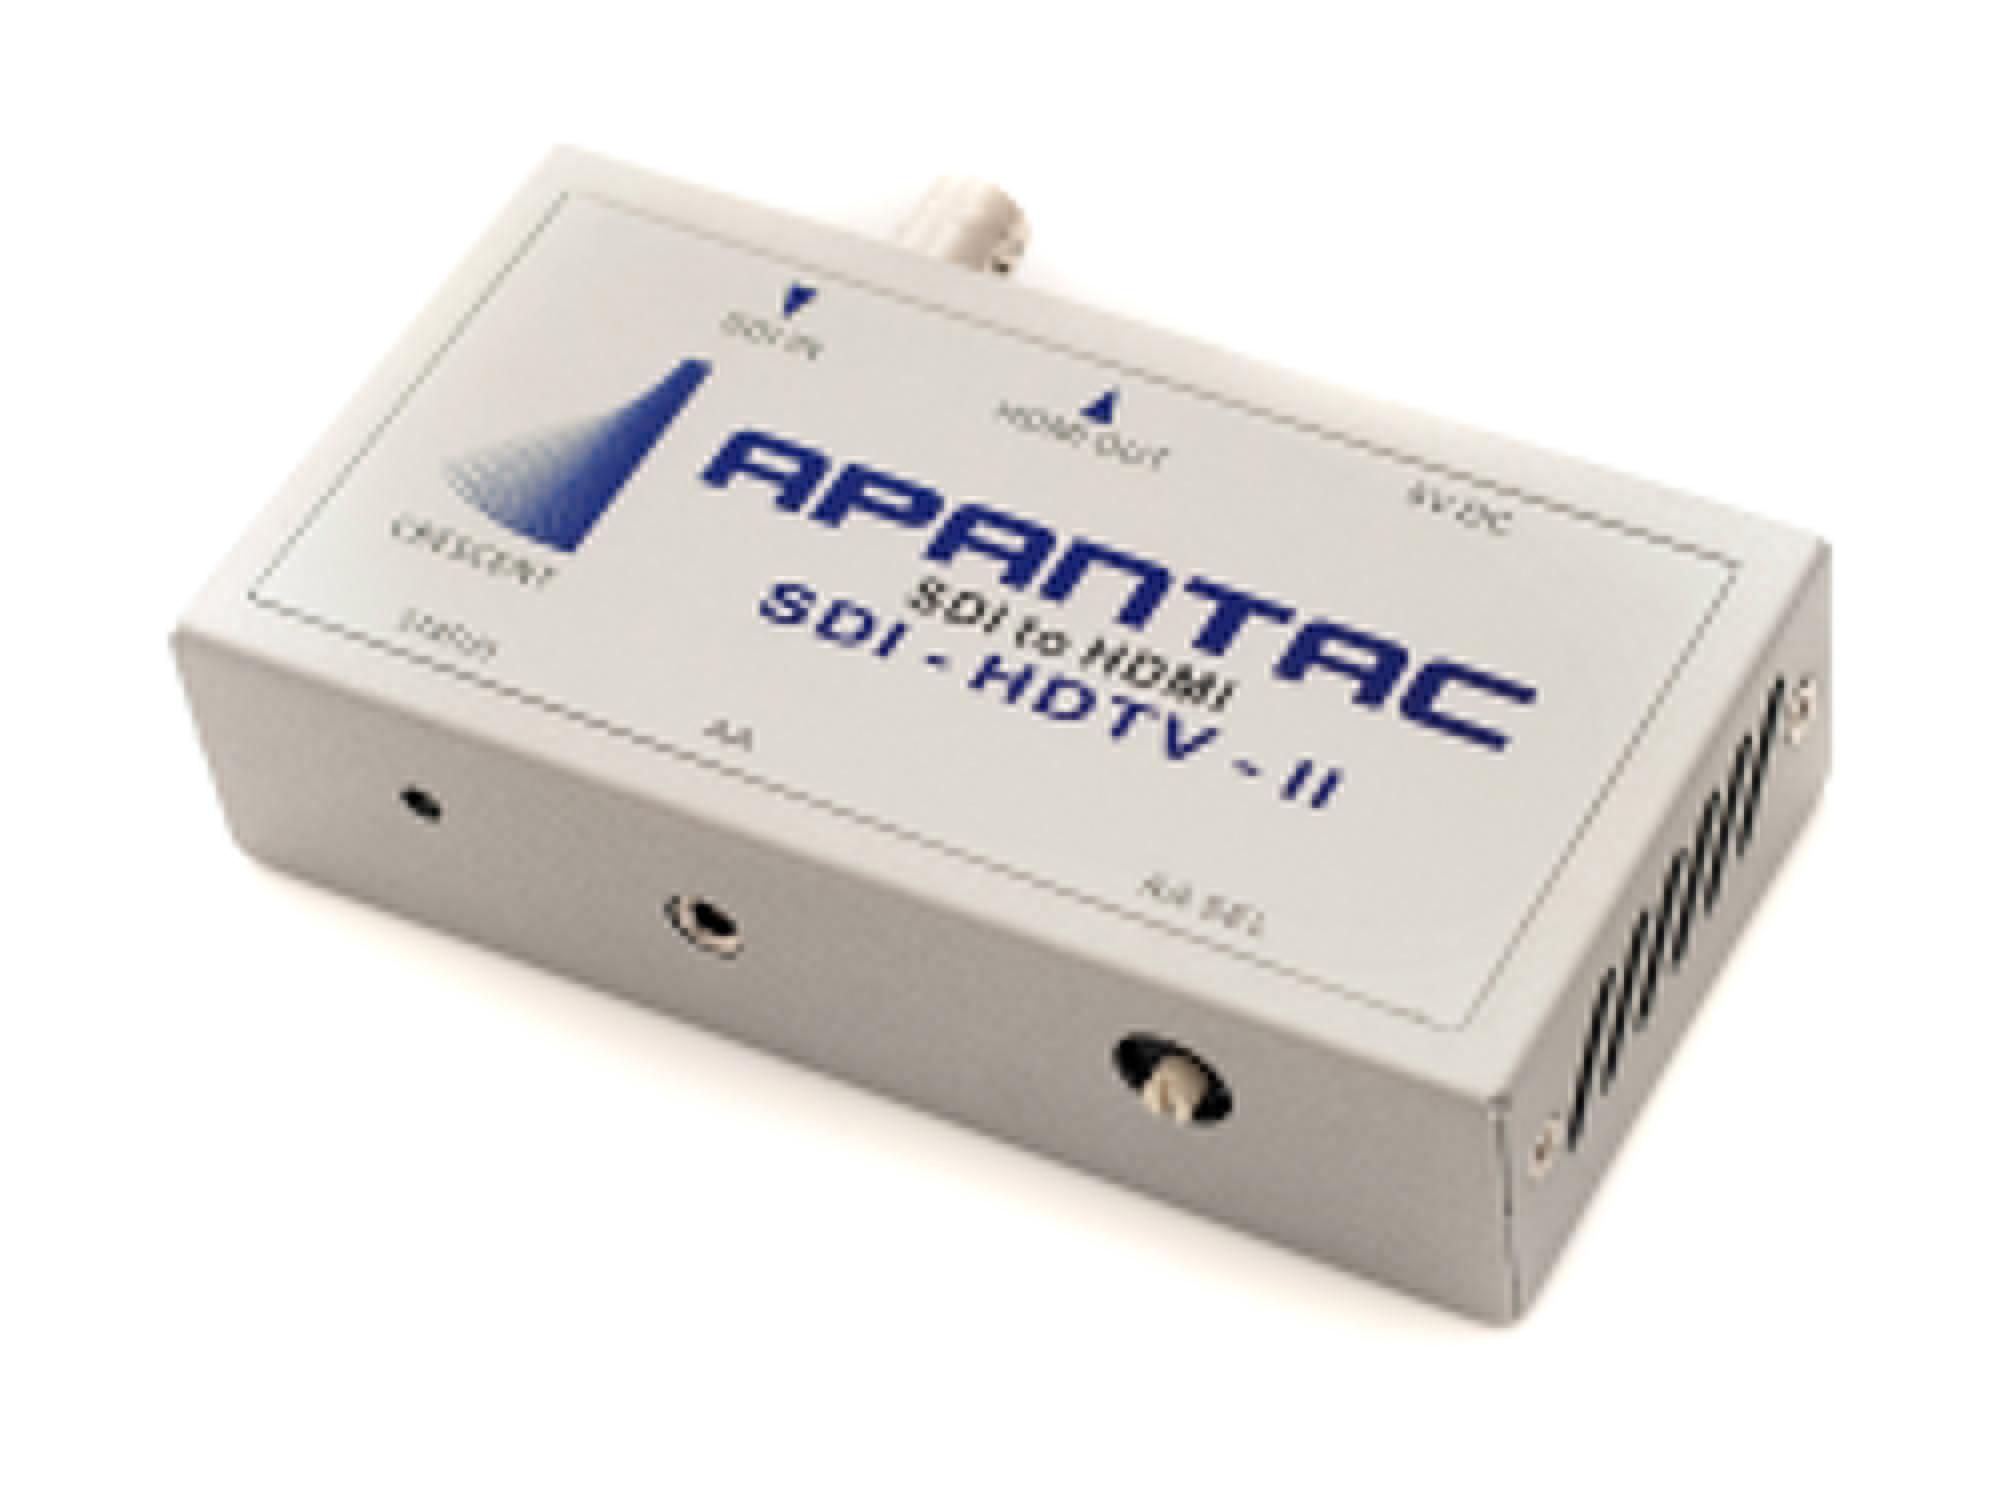 DA-SDI-HDTV-II SDI to HDMI/DVI Converter by Apantac